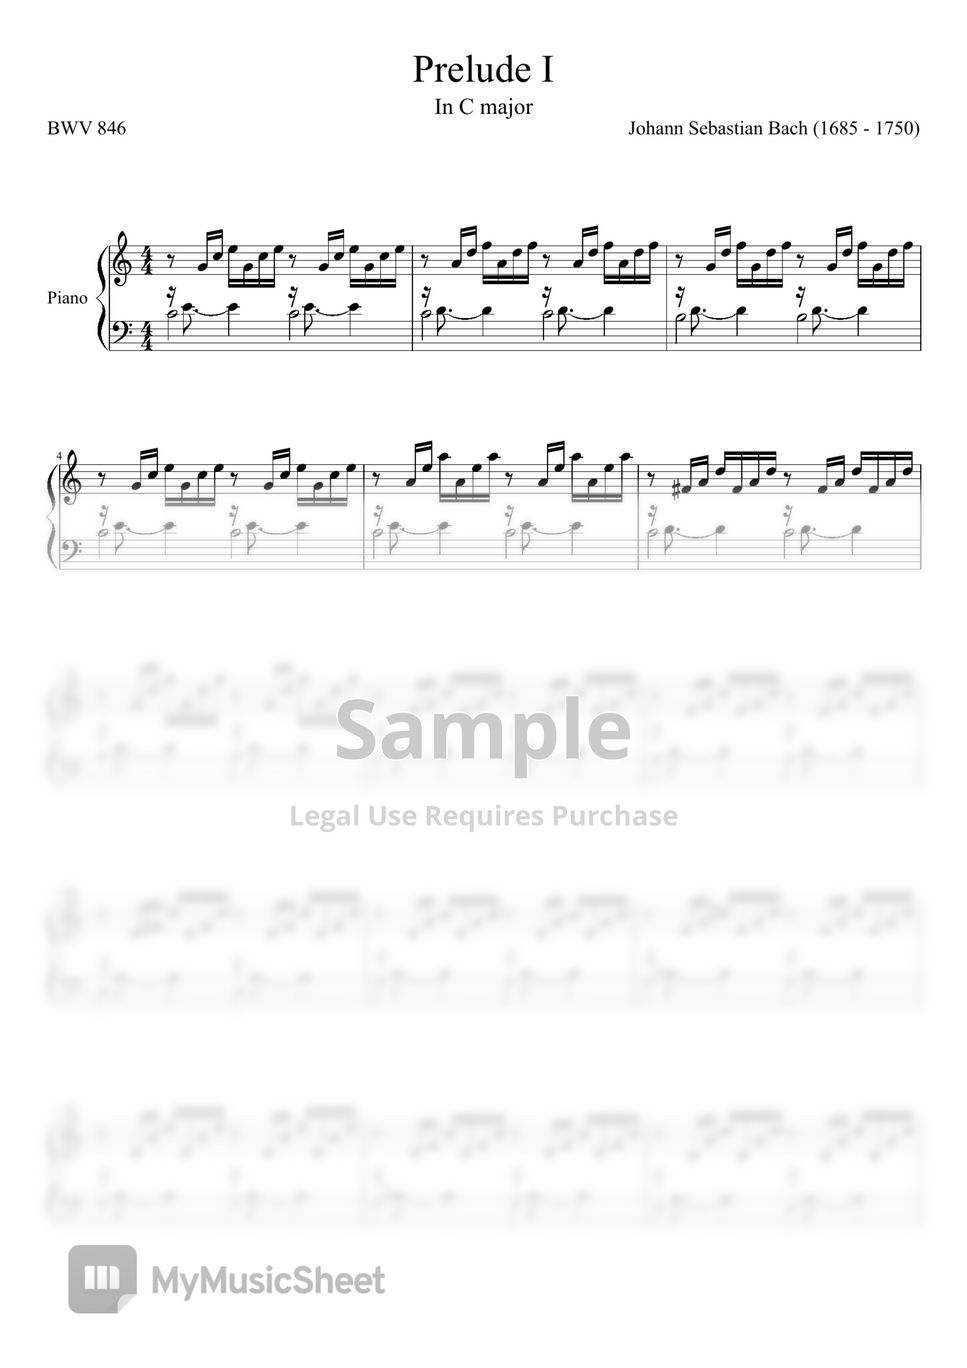 Johann Sebastian Bach - Prelude I in C major, BWV 846 - Well Tempered Clavier [First Book] by Johann Sebastian Bach